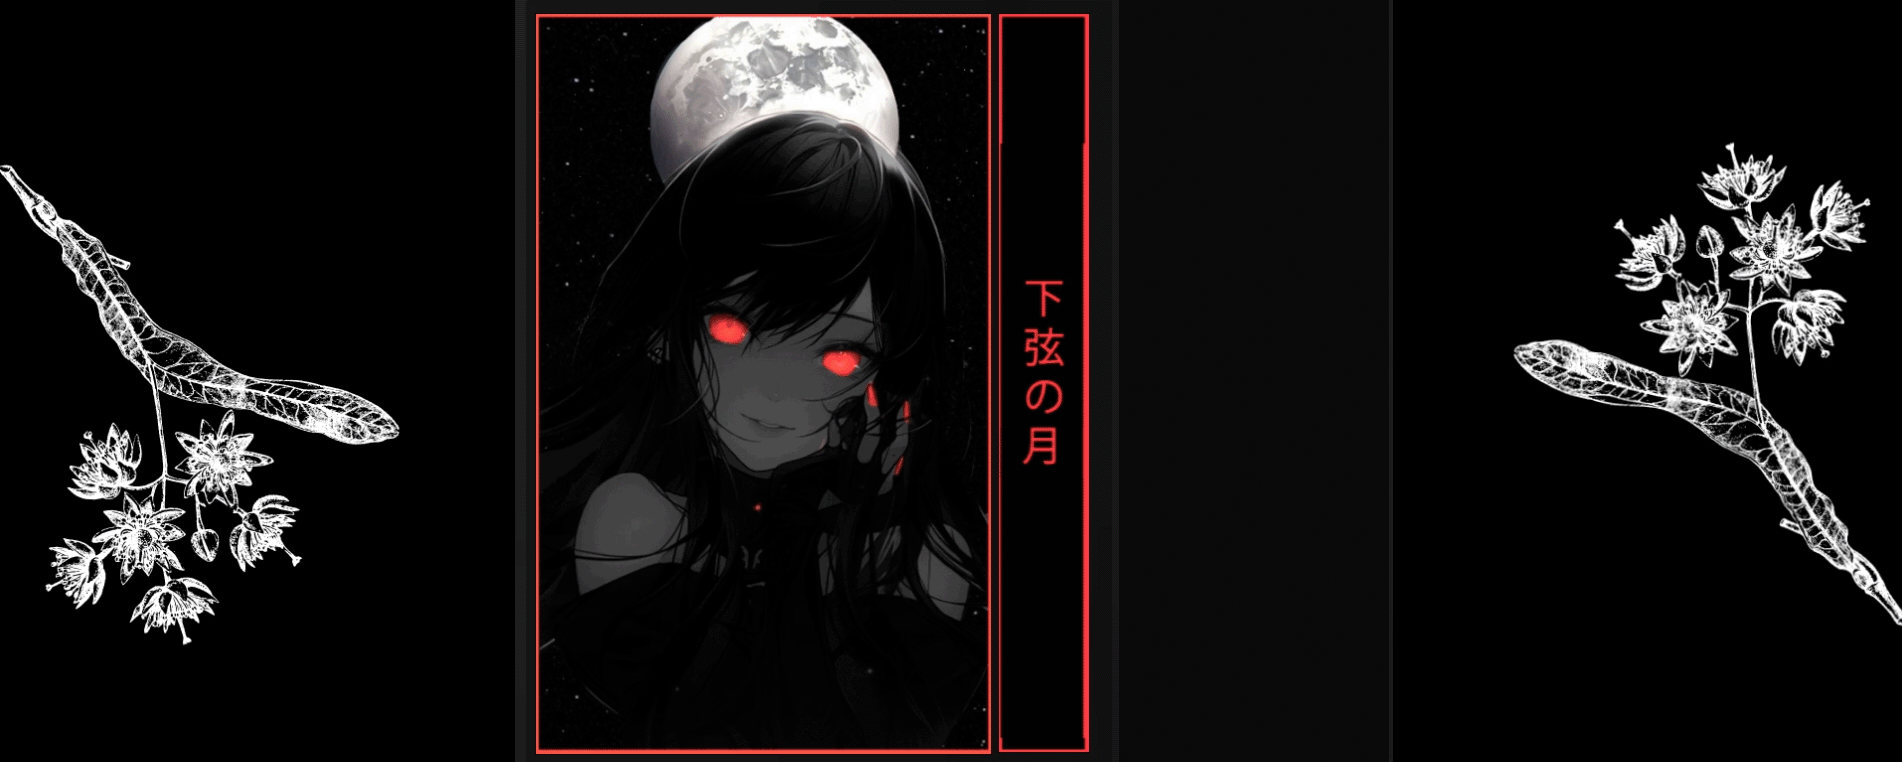 Anime Girl Steam Artwork by Poxaa on DeviantArt